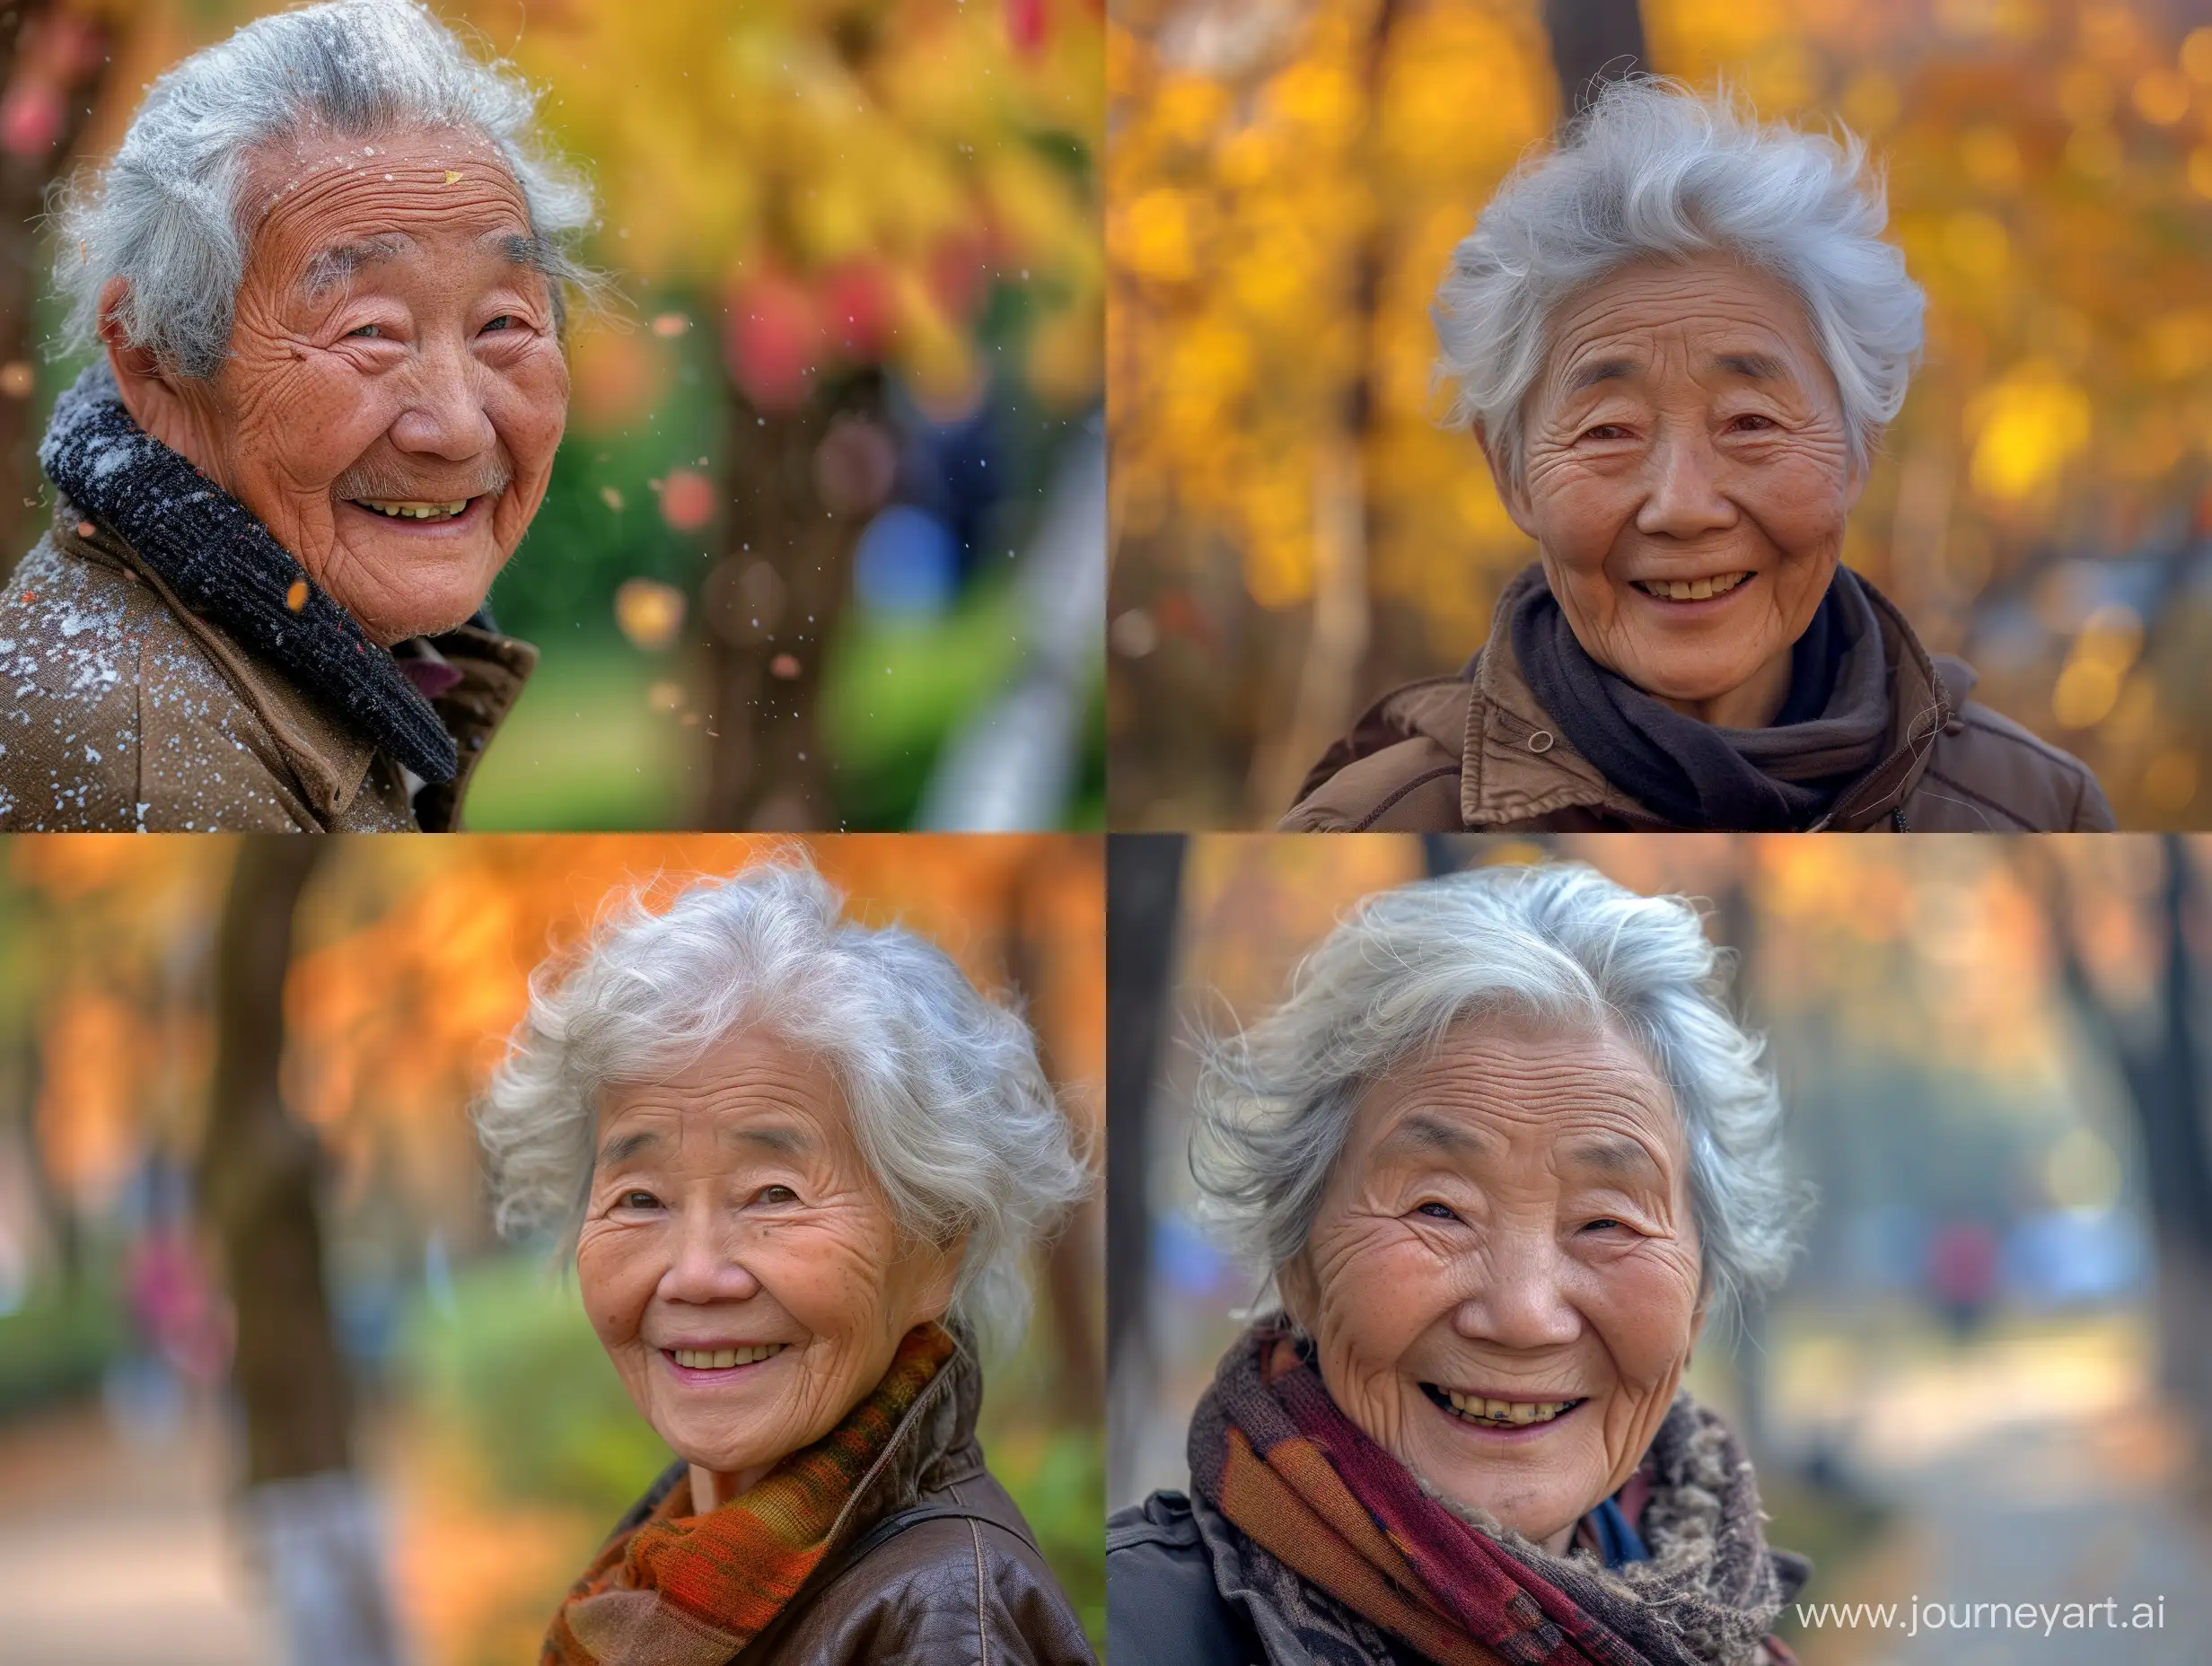 Joyful-Autumn-Stroll-Elderly-Chinese-Person-in-a-Park